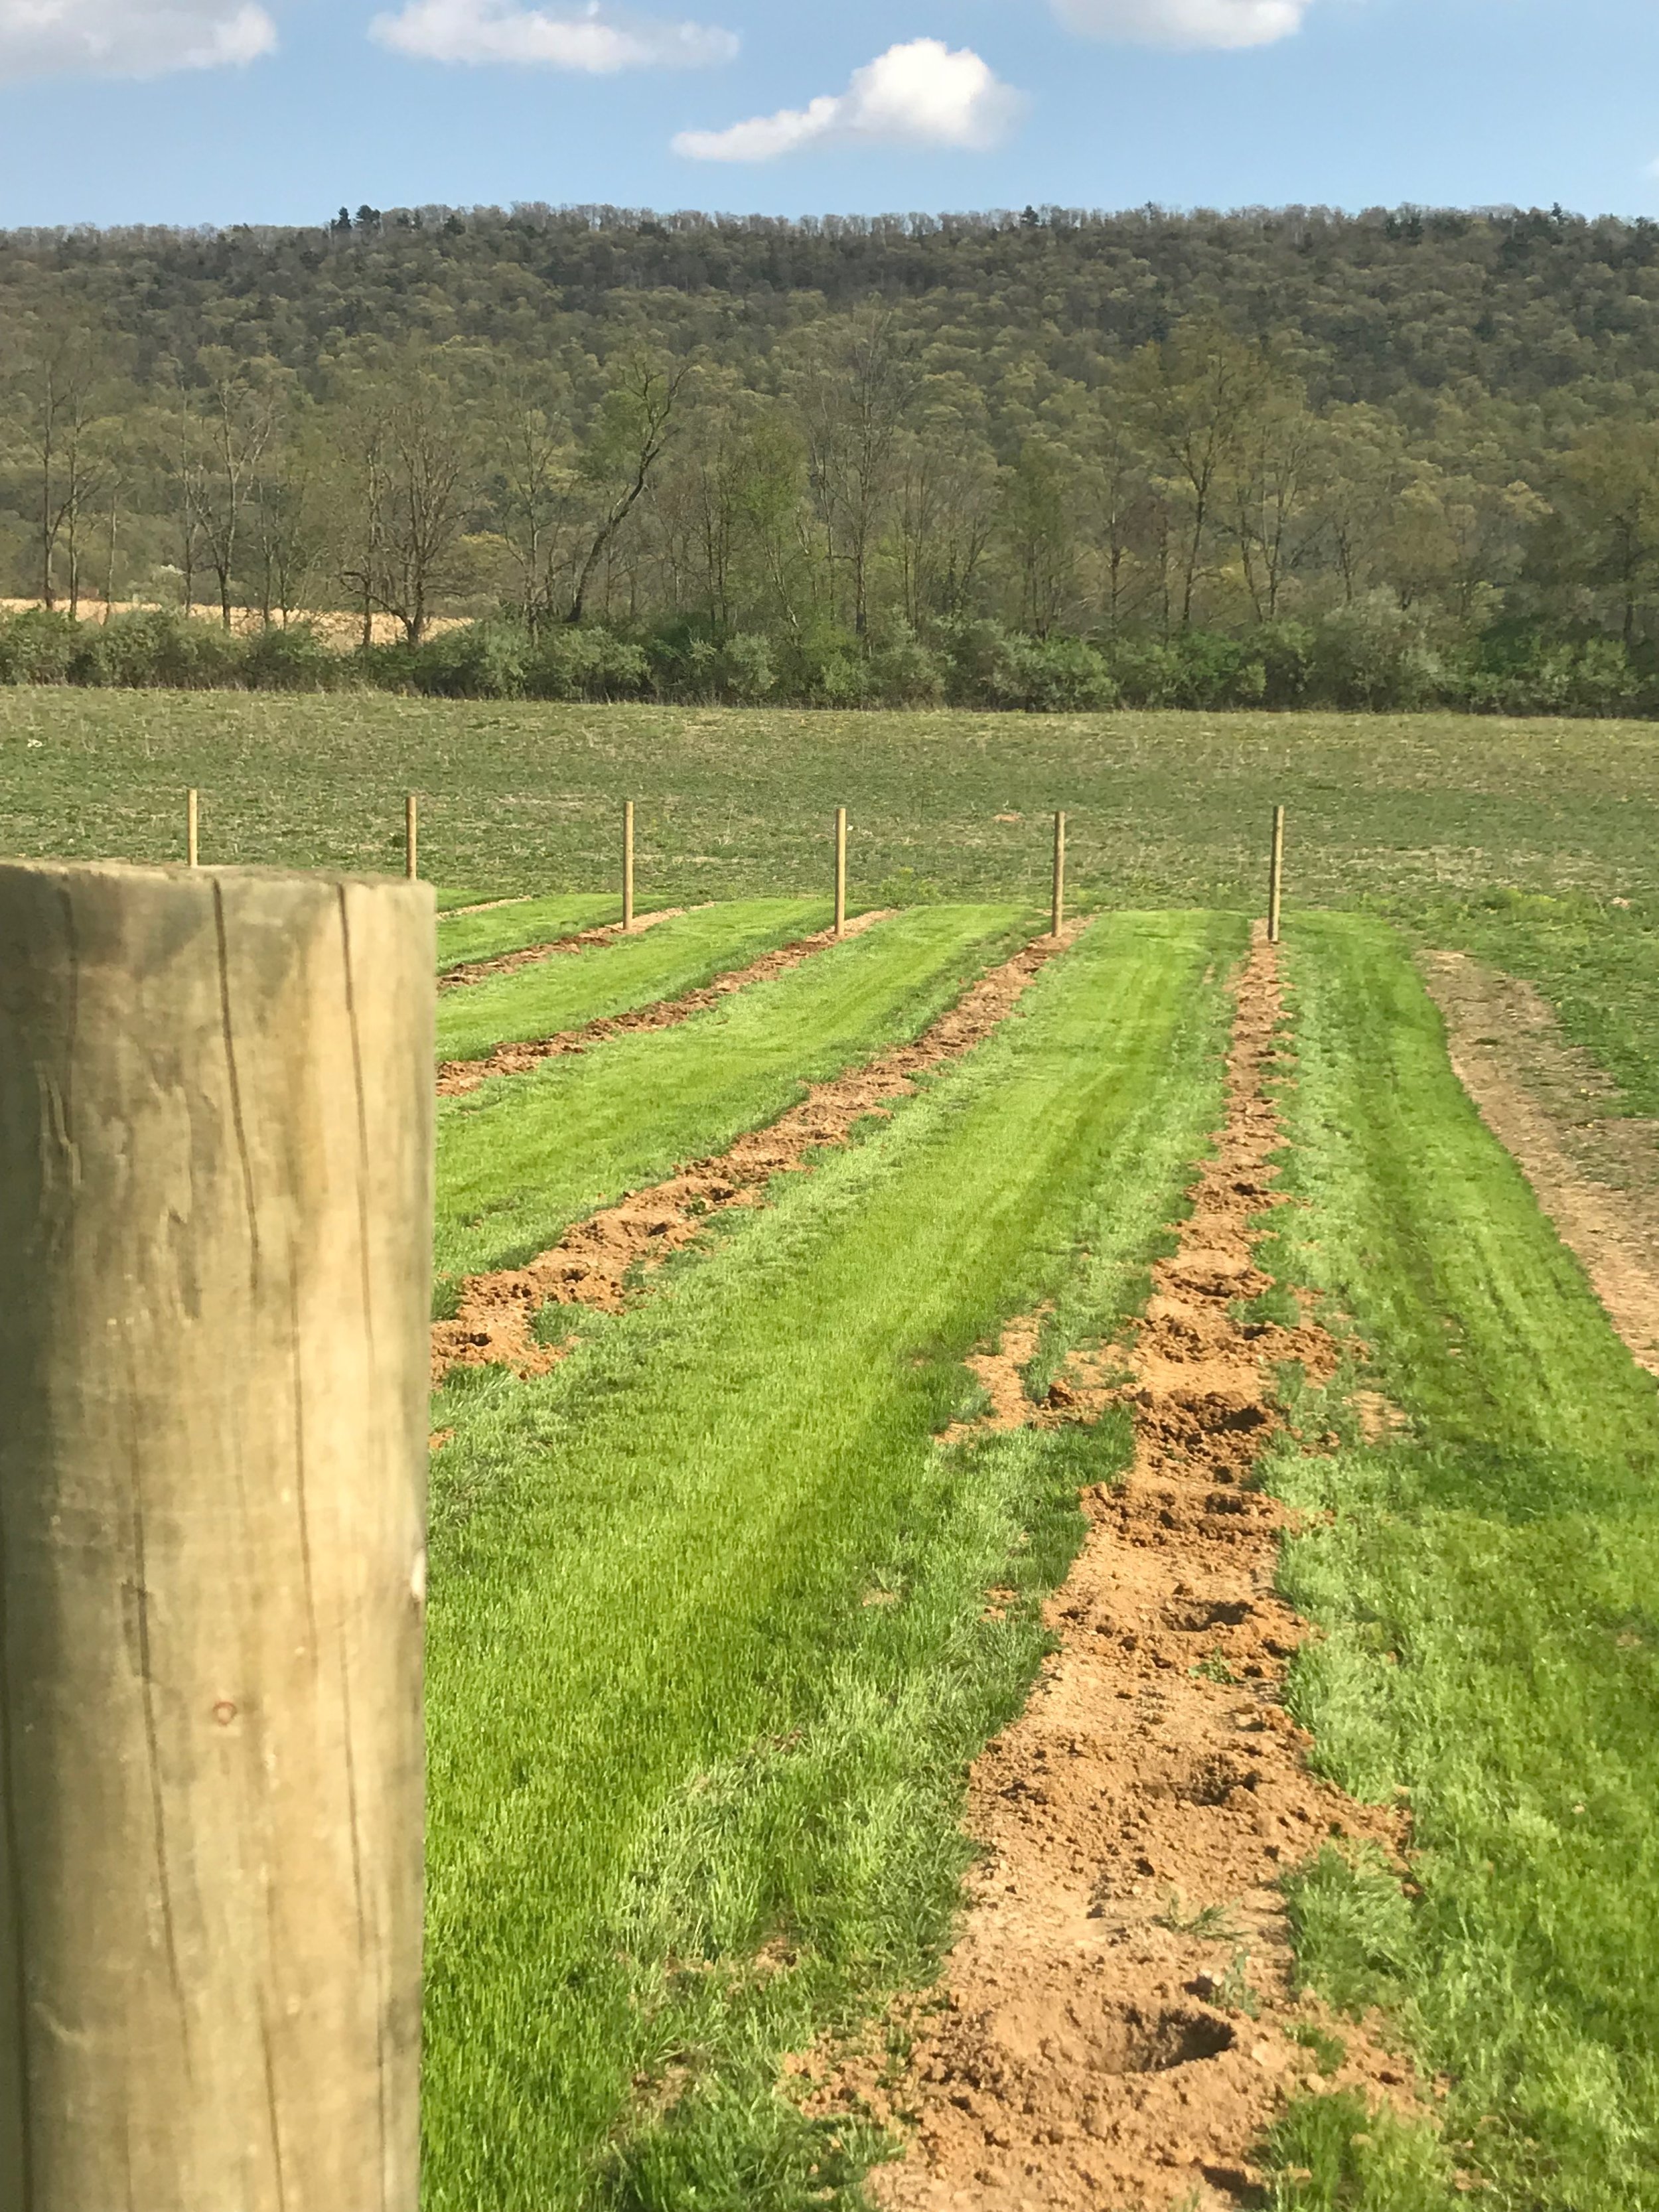   More vineyard posts.  